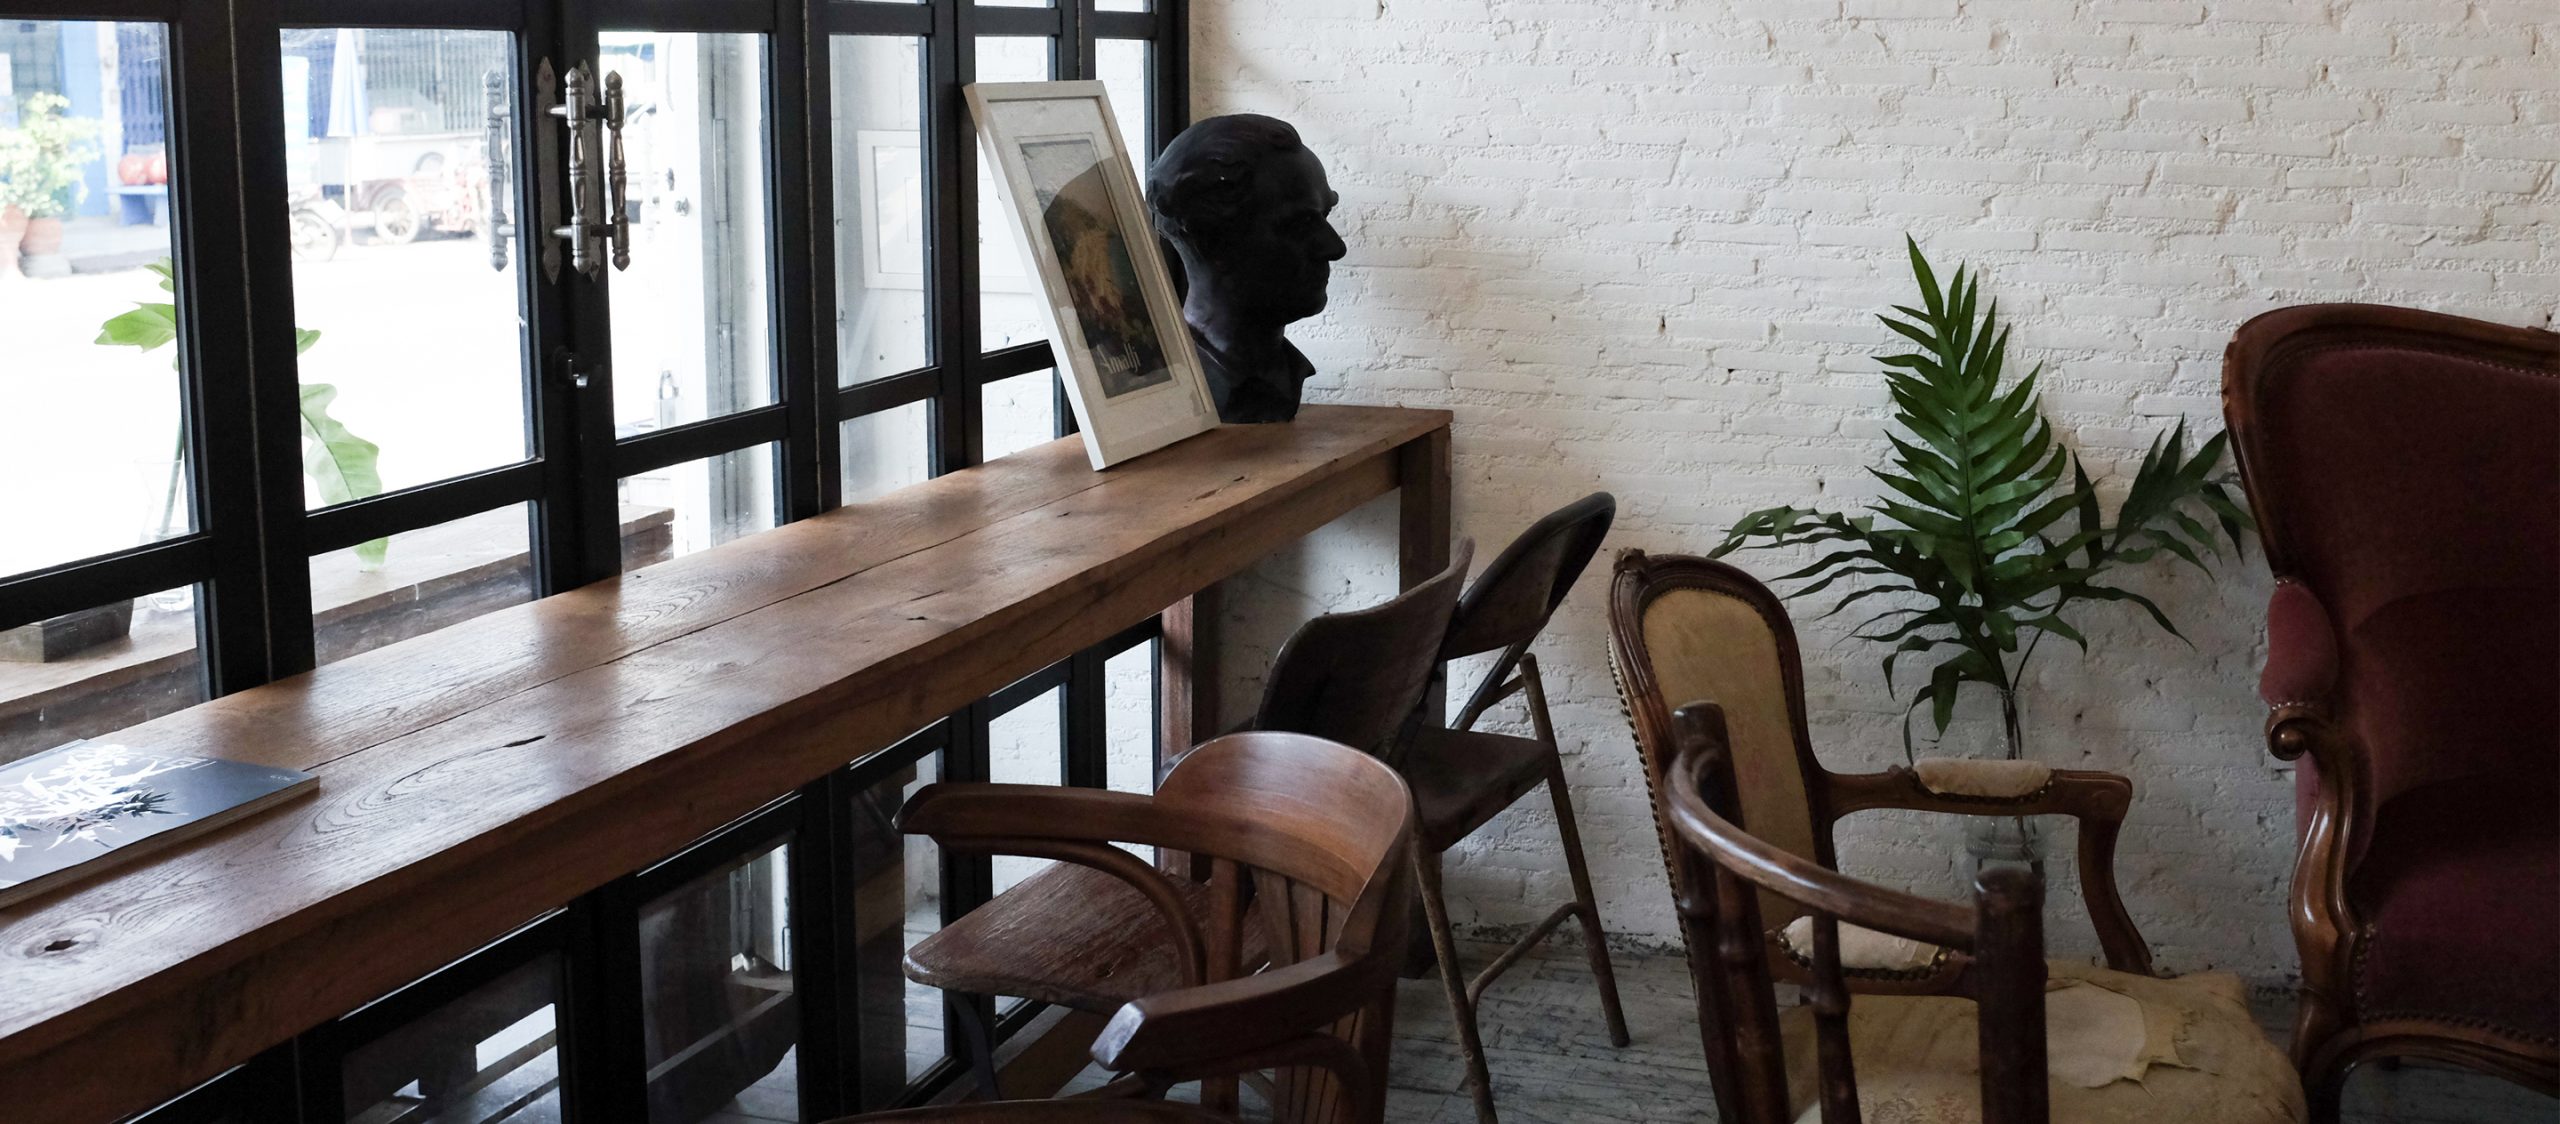 MAN Espresso Bar บาร์กาแฟของทายาทร้านกาแฟเก่าในชัยนาทที่อยากเบลนด์ความทันสมัยให้เข้ากับชุมชน